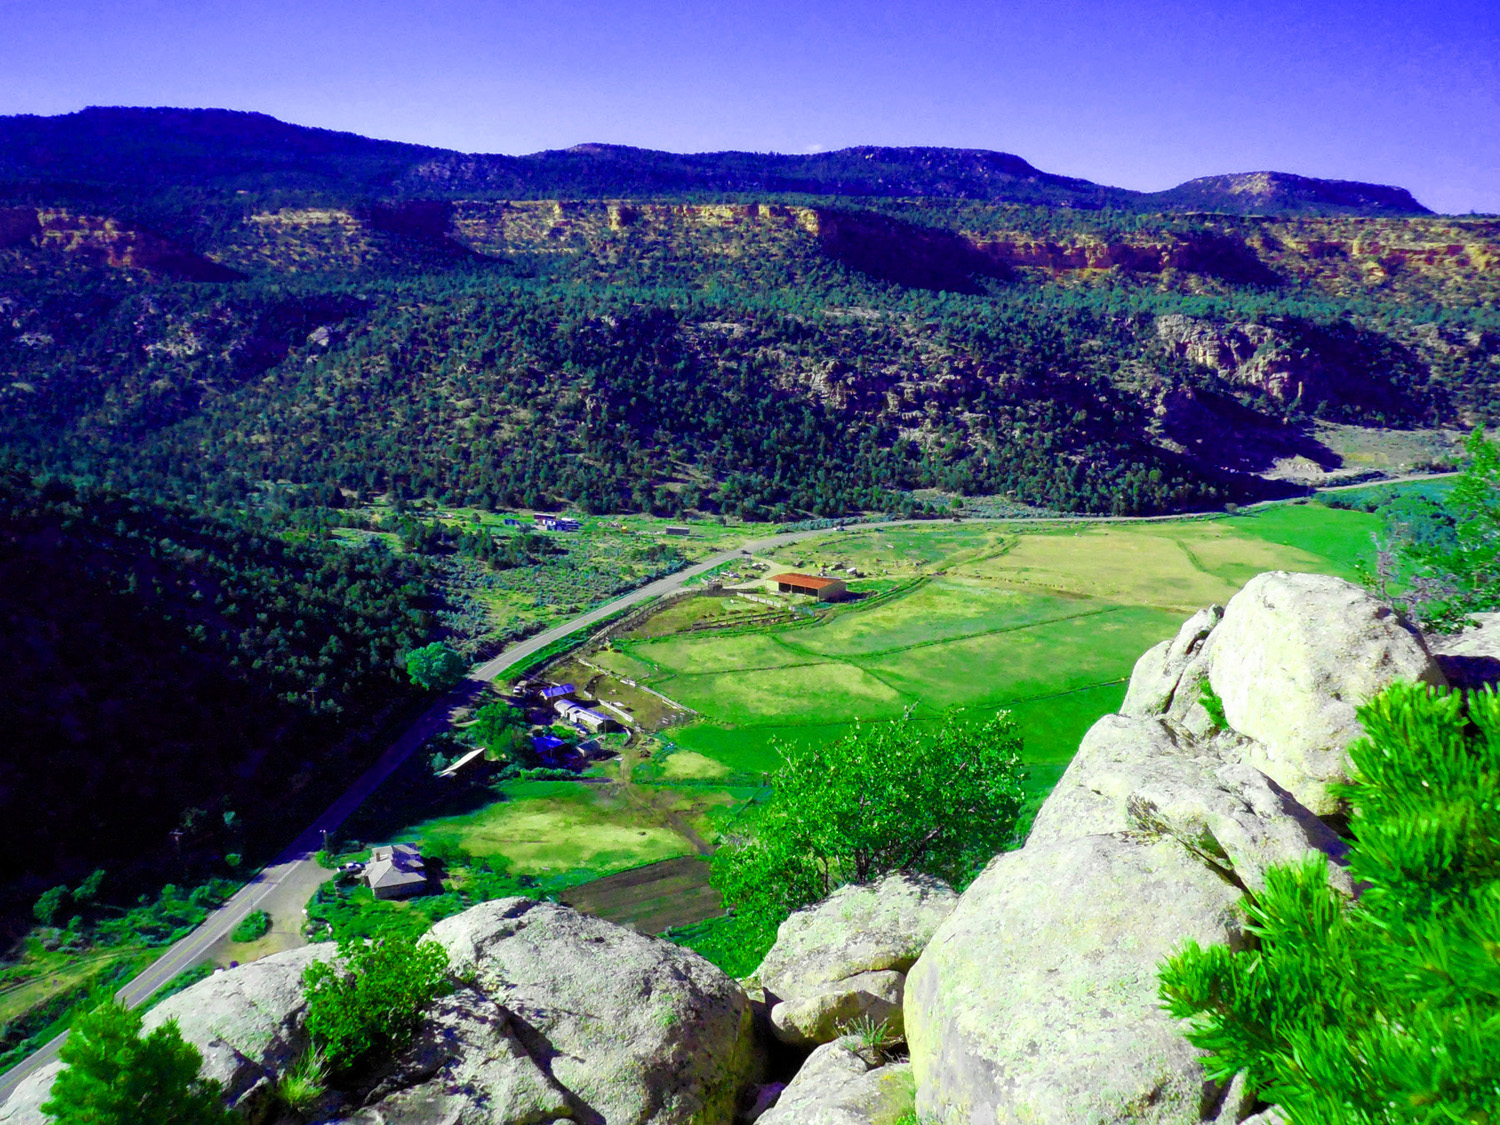 Ranch in Unaweep Canyon